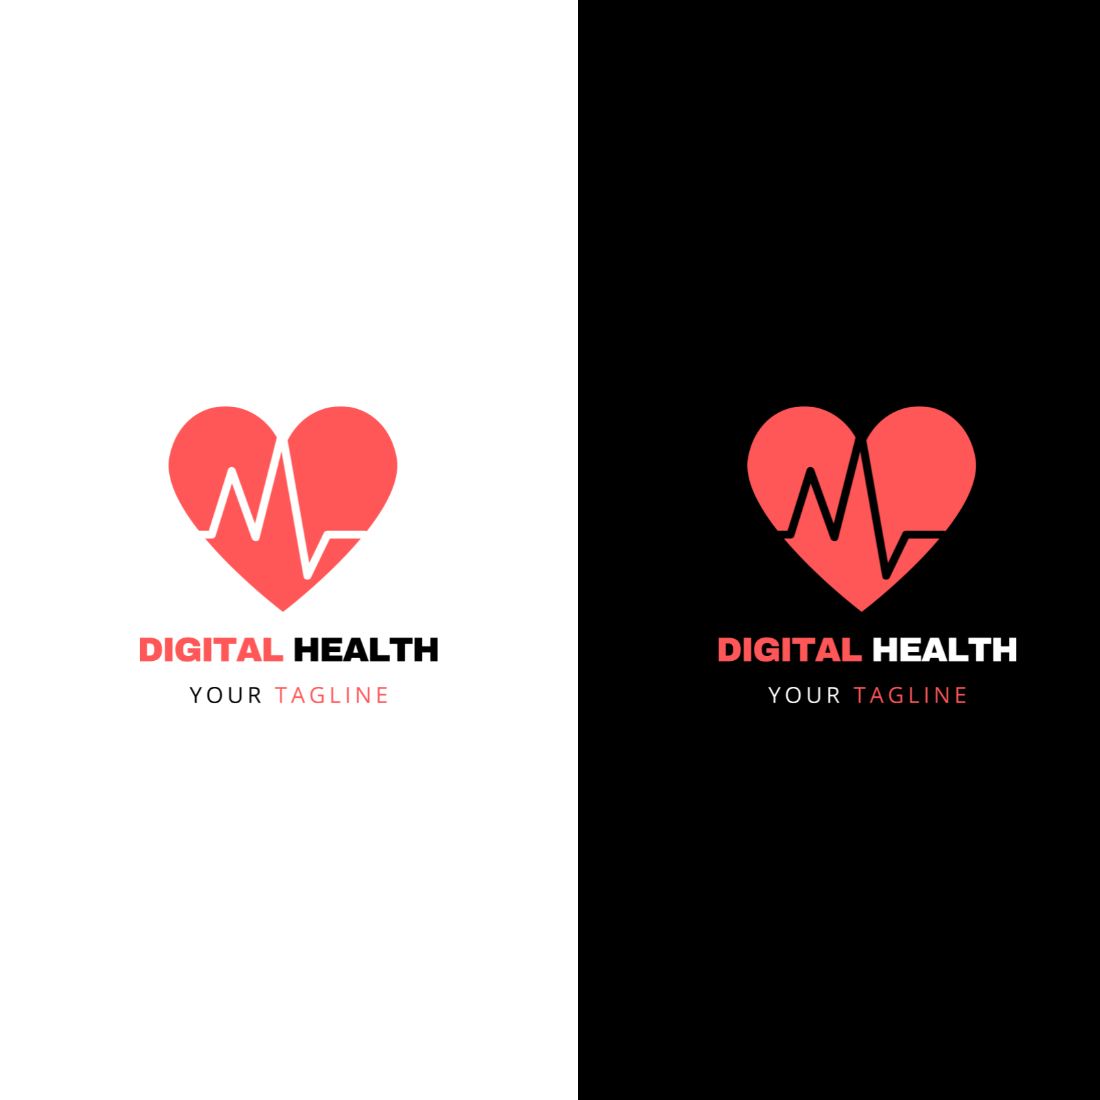 digital health logo mb5 538